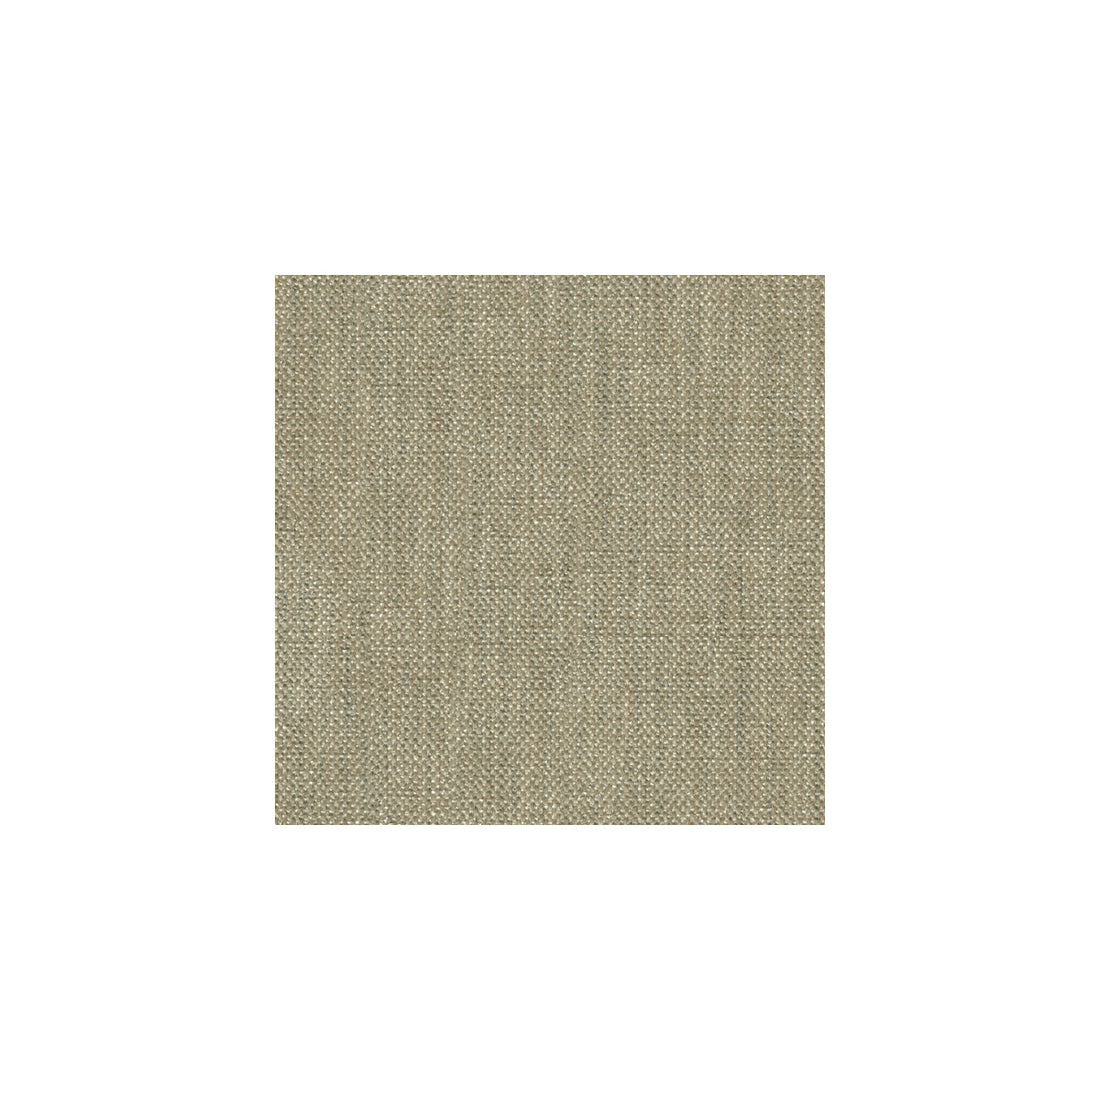 Kravet Smart fabric in 33577-11 color - pattern 33577.11.0 - by Kravet Smart in the Smart collection